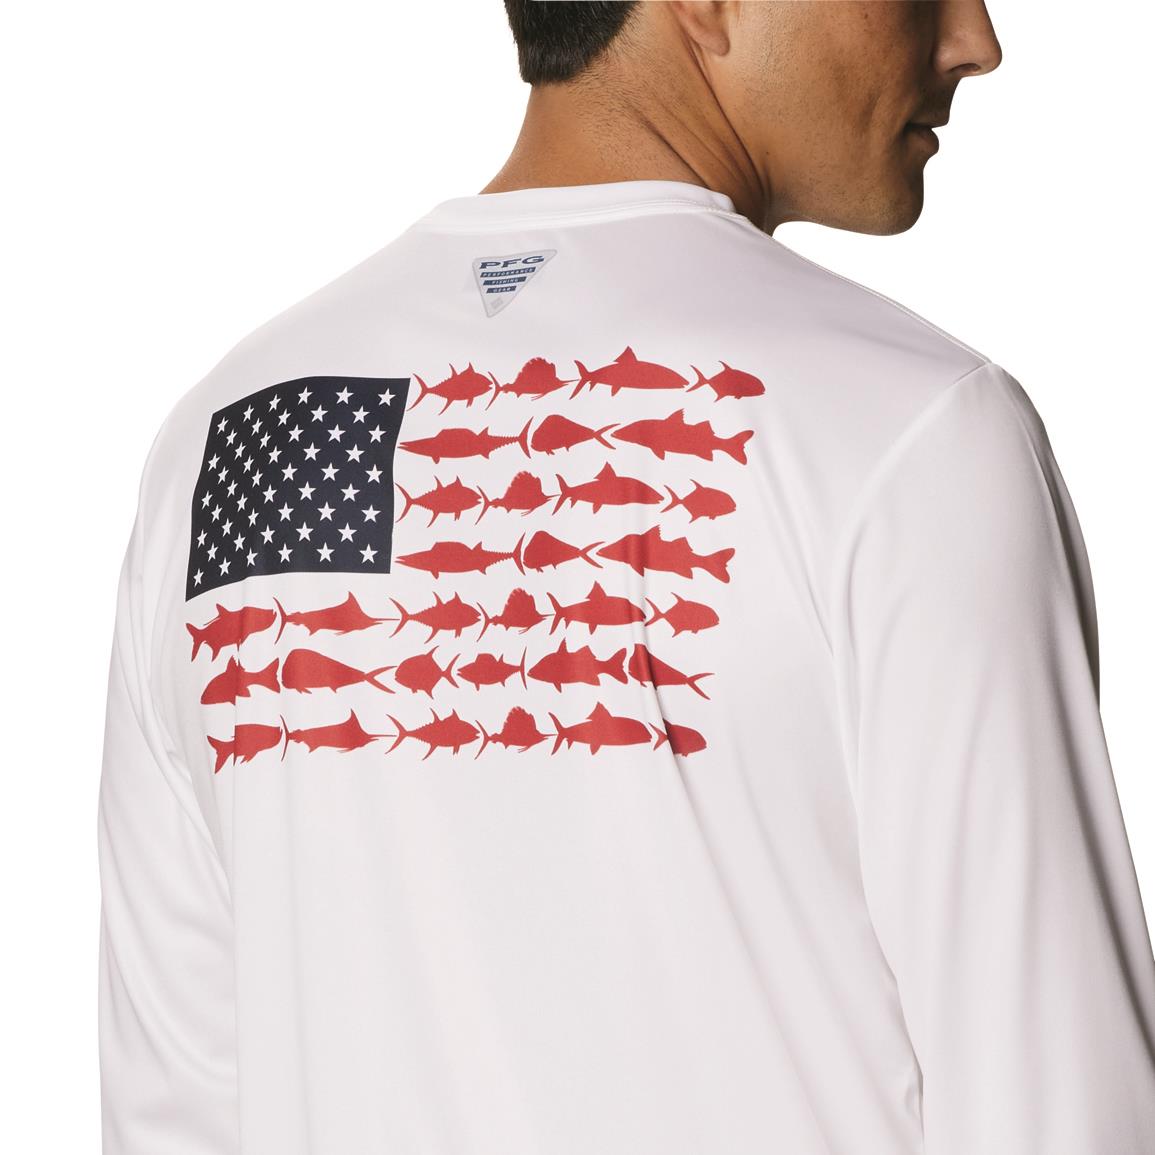 Columbia Men's Terminal Tackle PFG Fish Flag Long Sleeve Shirt, White/Navy